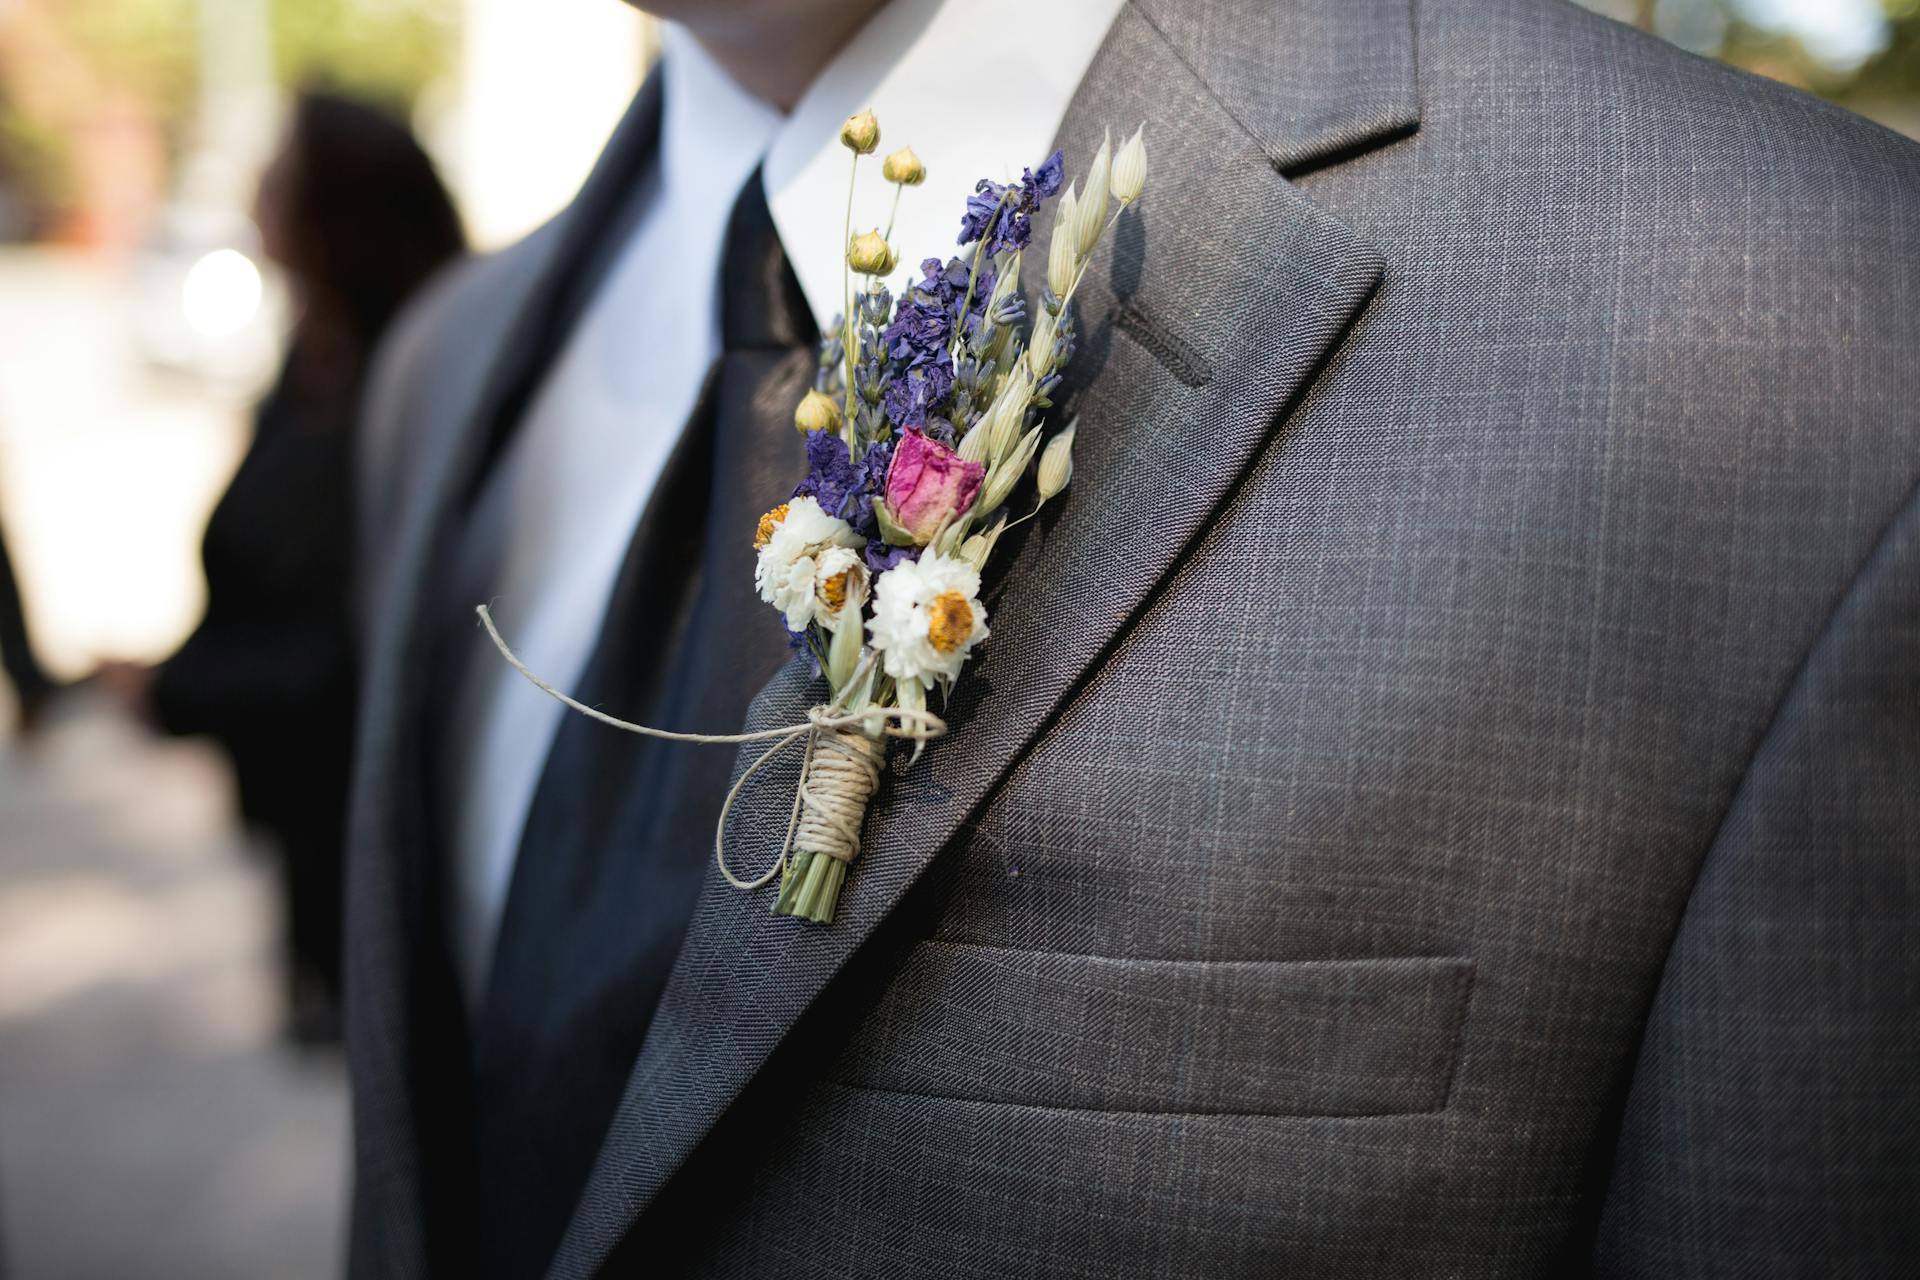 Un boutonnière de flores en la chaqueta del traje gris del novio | Fuente: Pexels